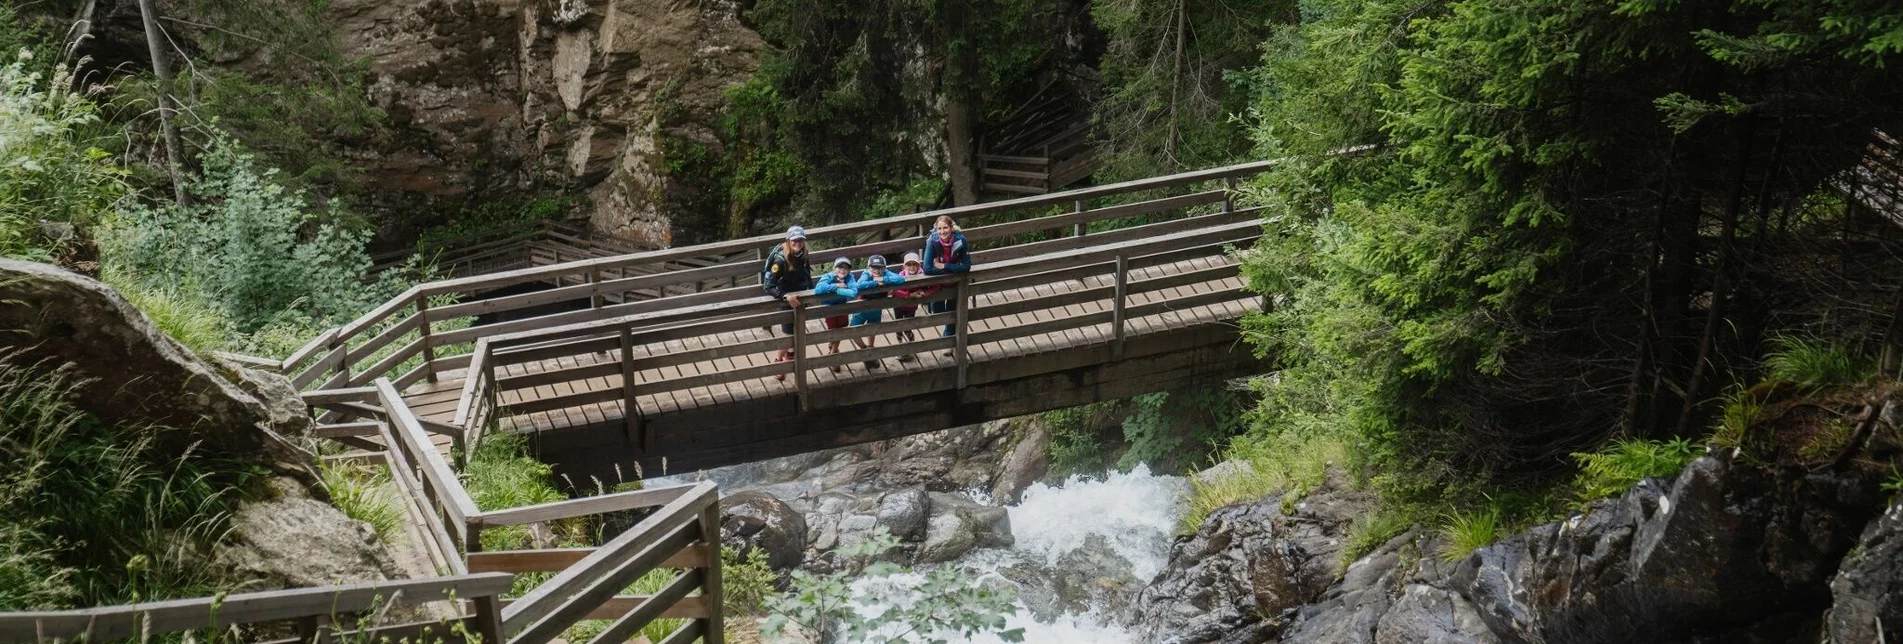 Hiking route Krakaudorf - Trübeck- Günster Wasserfall - Touren-Impression #1 | © Tourismusverband Murau